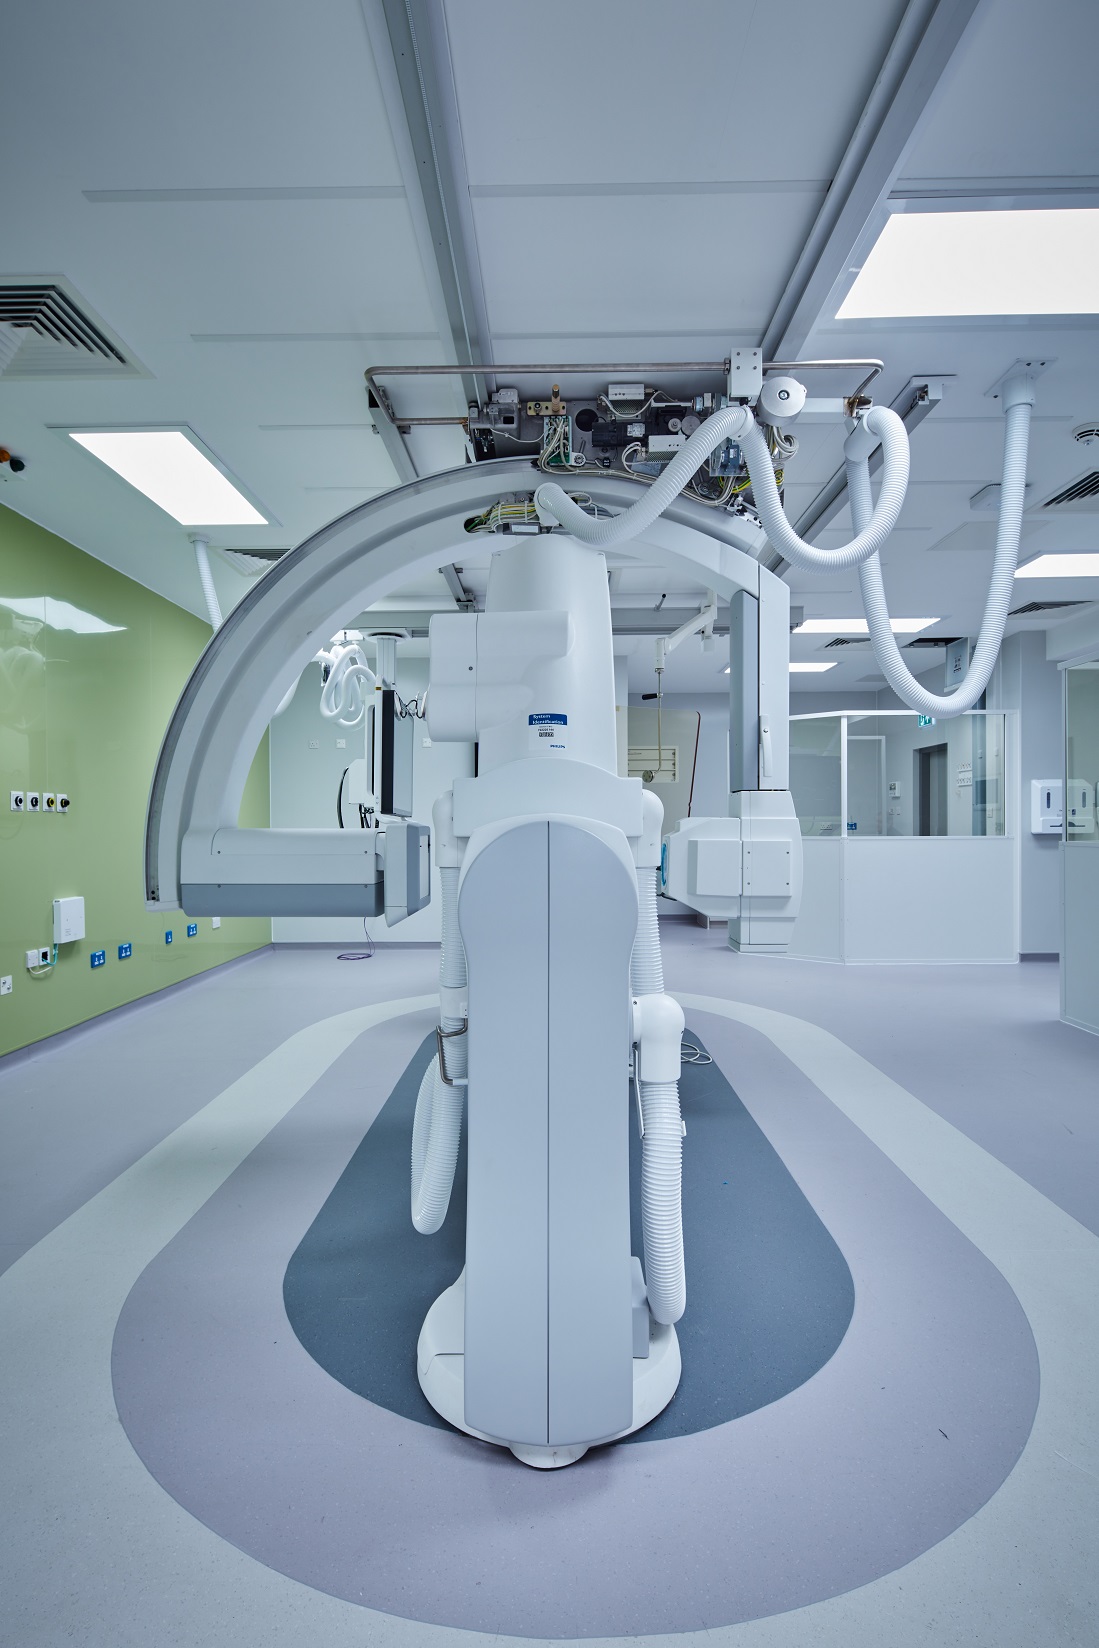 Tilbury Douglas completes new £10m Catheter Laboratories for Liverpool Heart & Chest Hospital